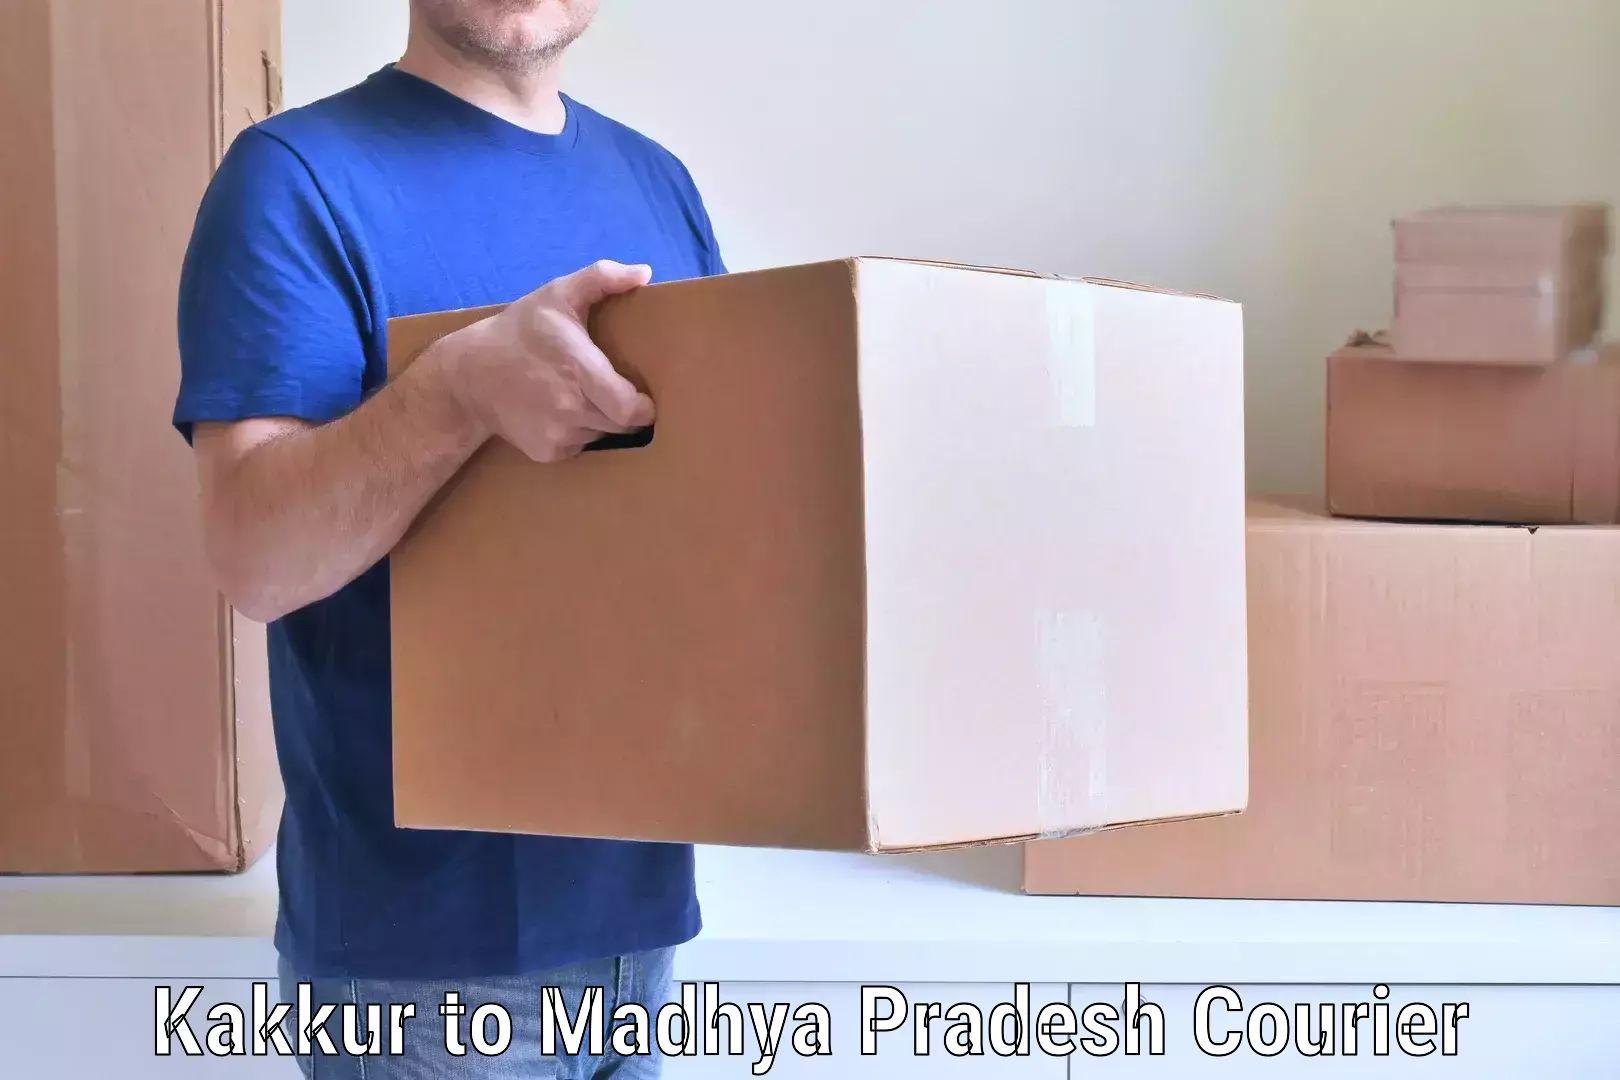 Professional furniture movers Kakkur to Agar